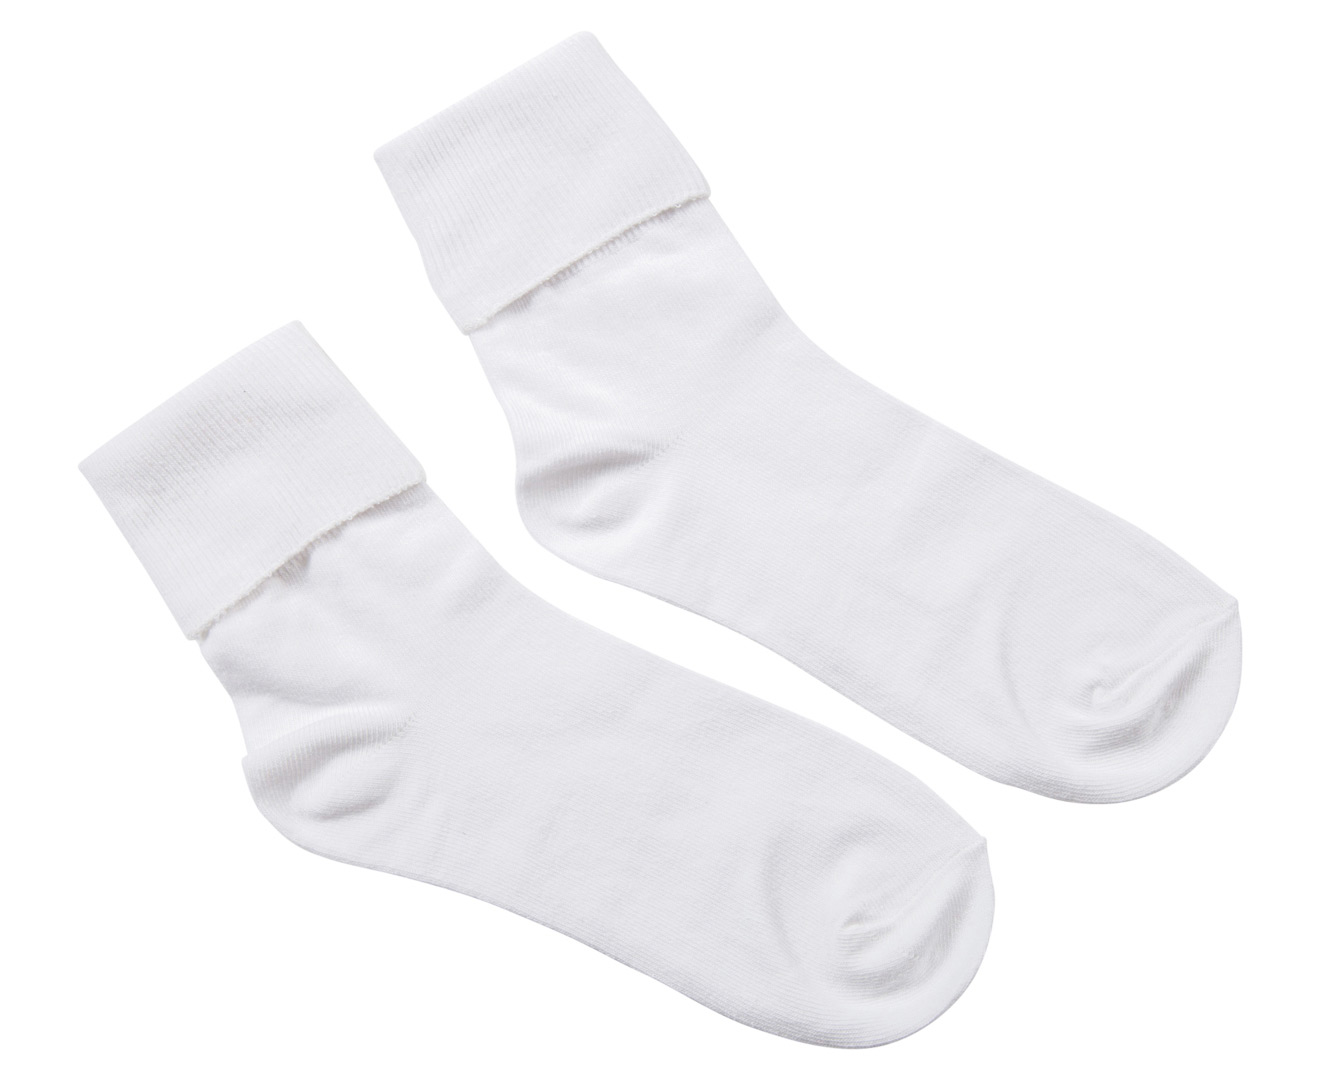 Bonds Kids' School Turnover Top Socks 3-Pack - White | Great daily ...